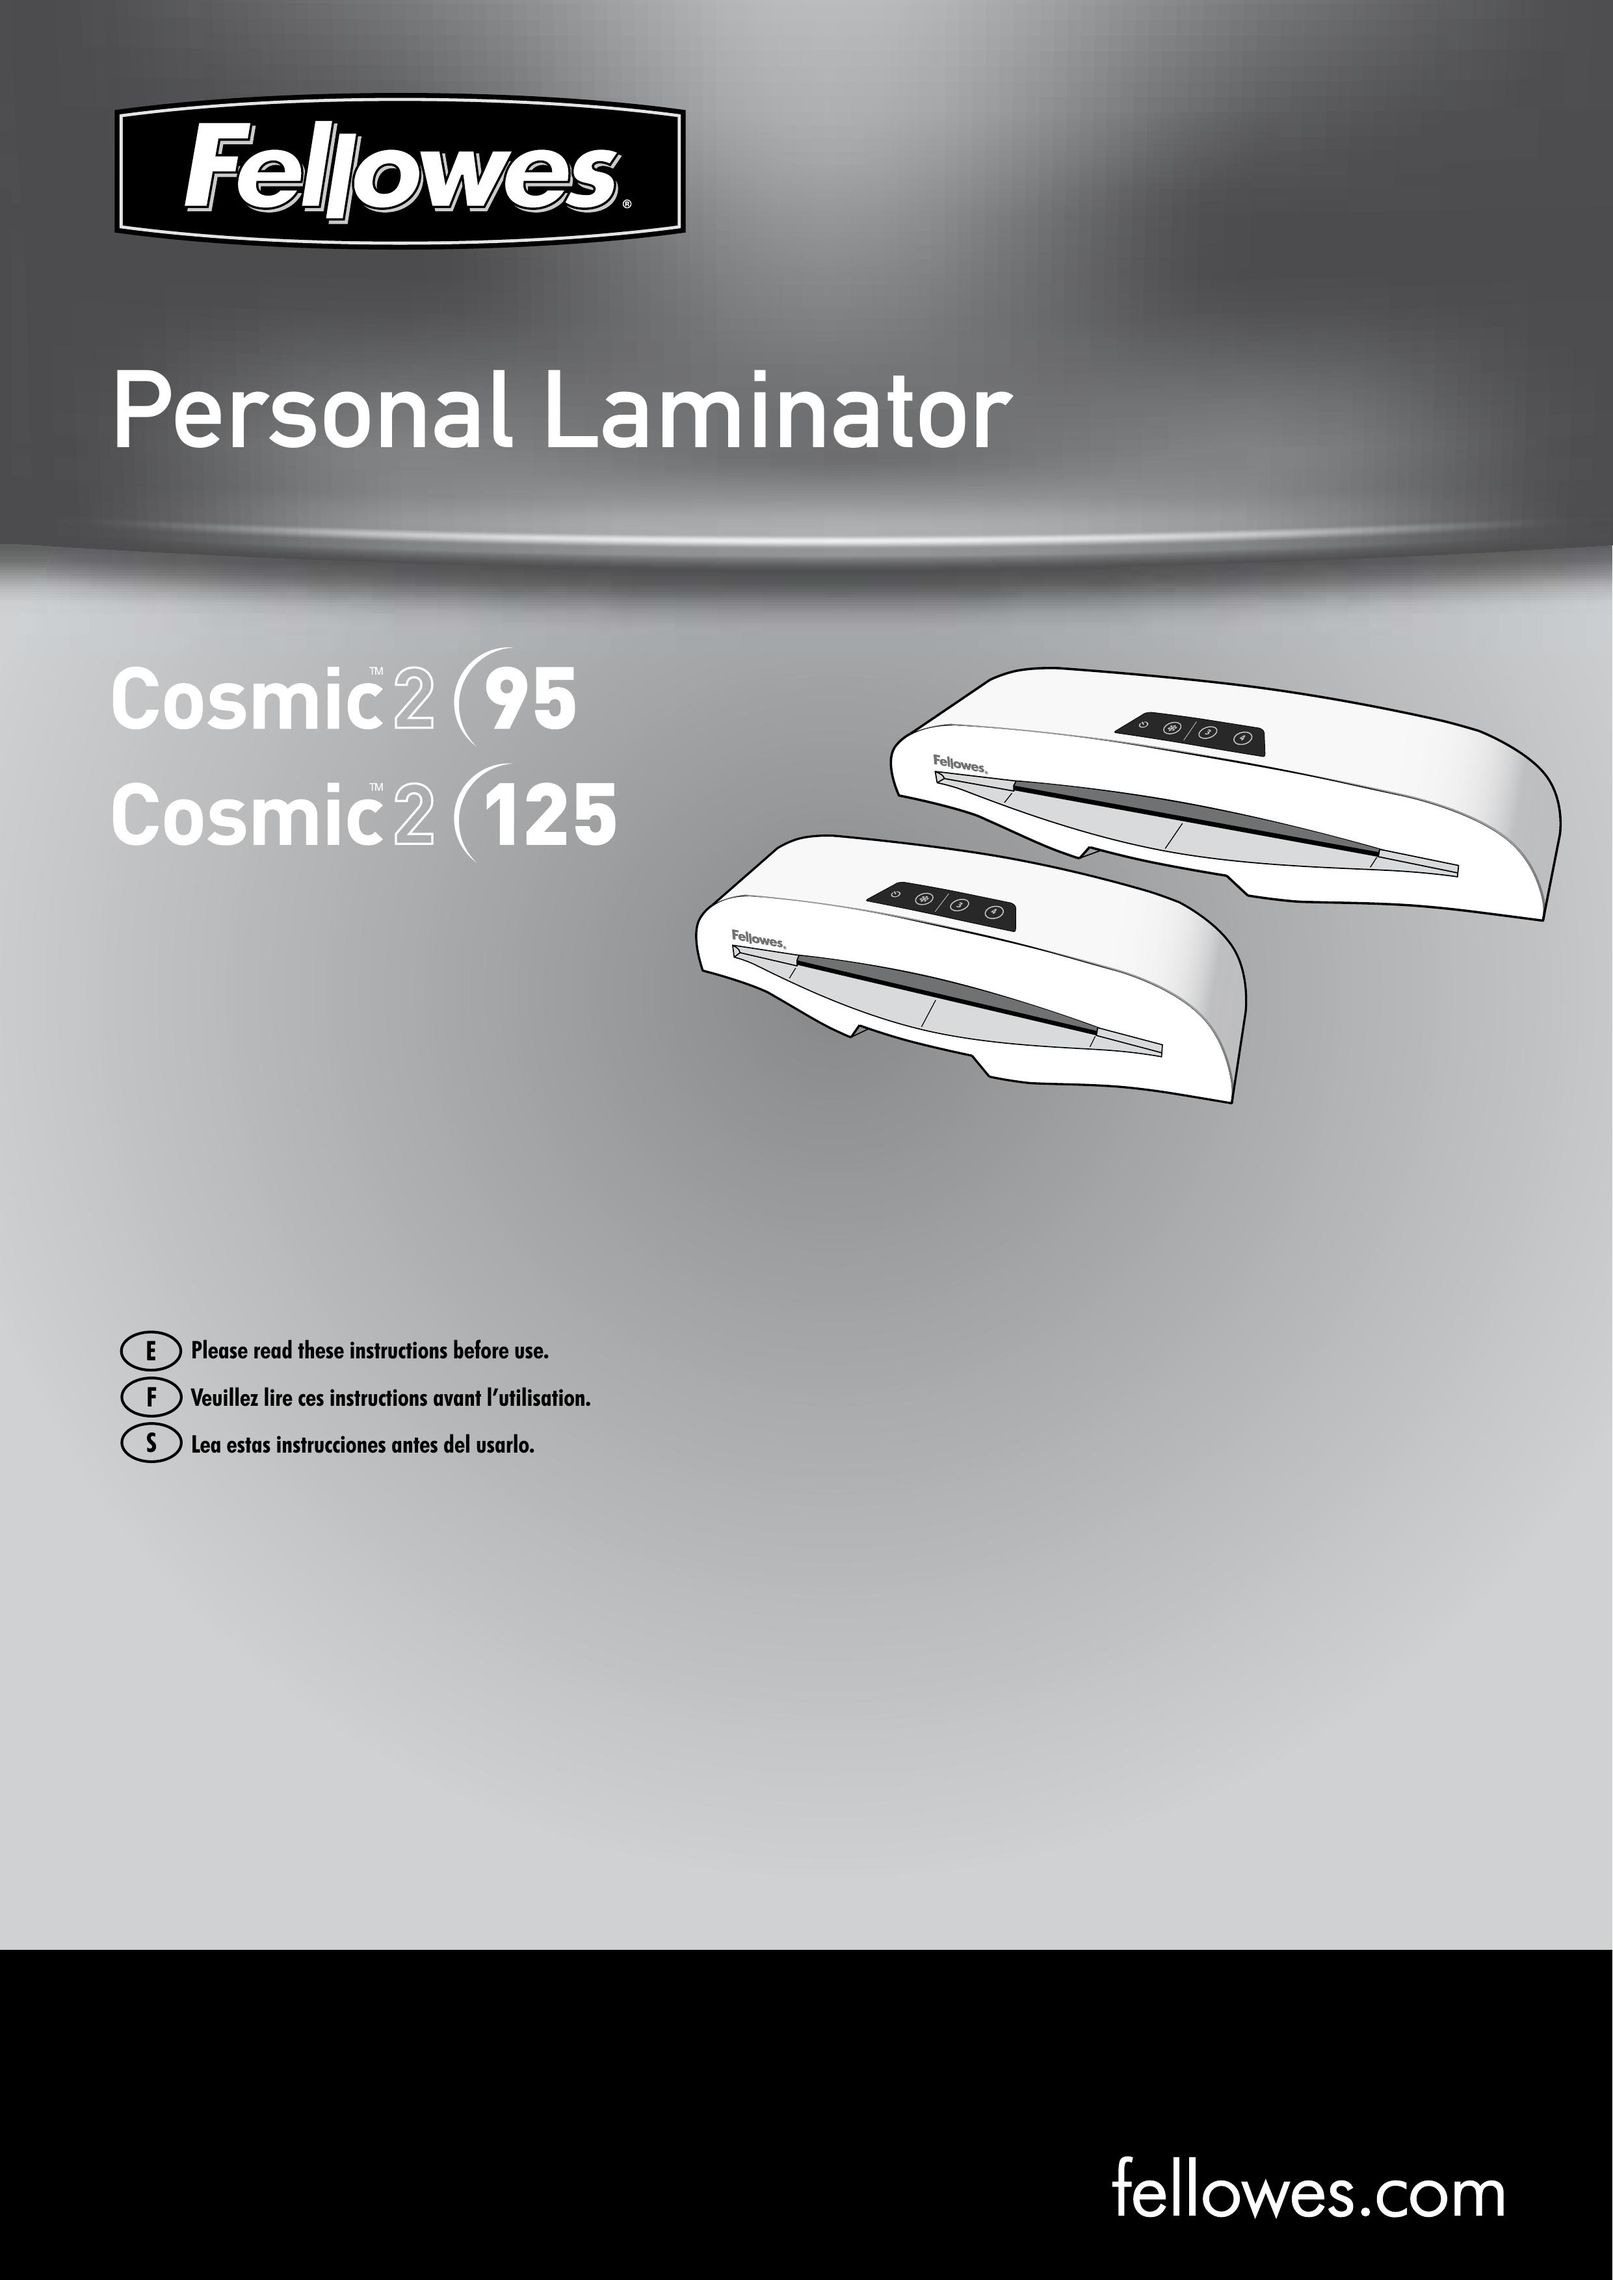 Fellowes Cosmic2 95 Laminator User Manual